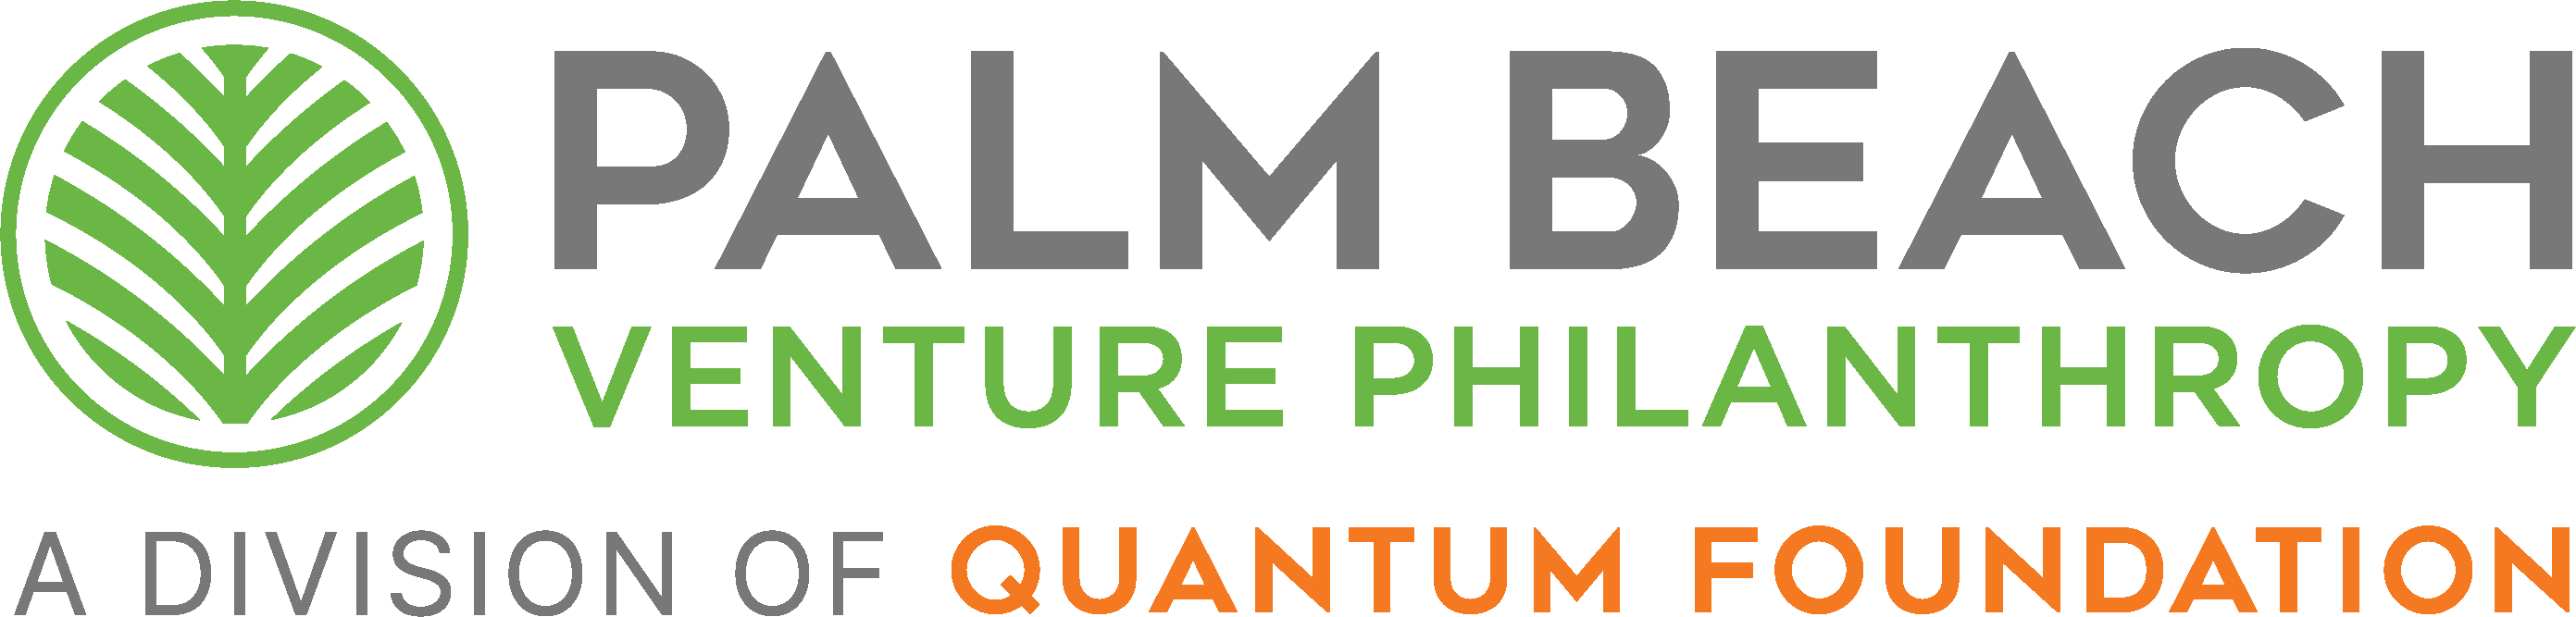 Palm Beach Venture Philanthropy Logo_ Division of QF_Horizontal RGB